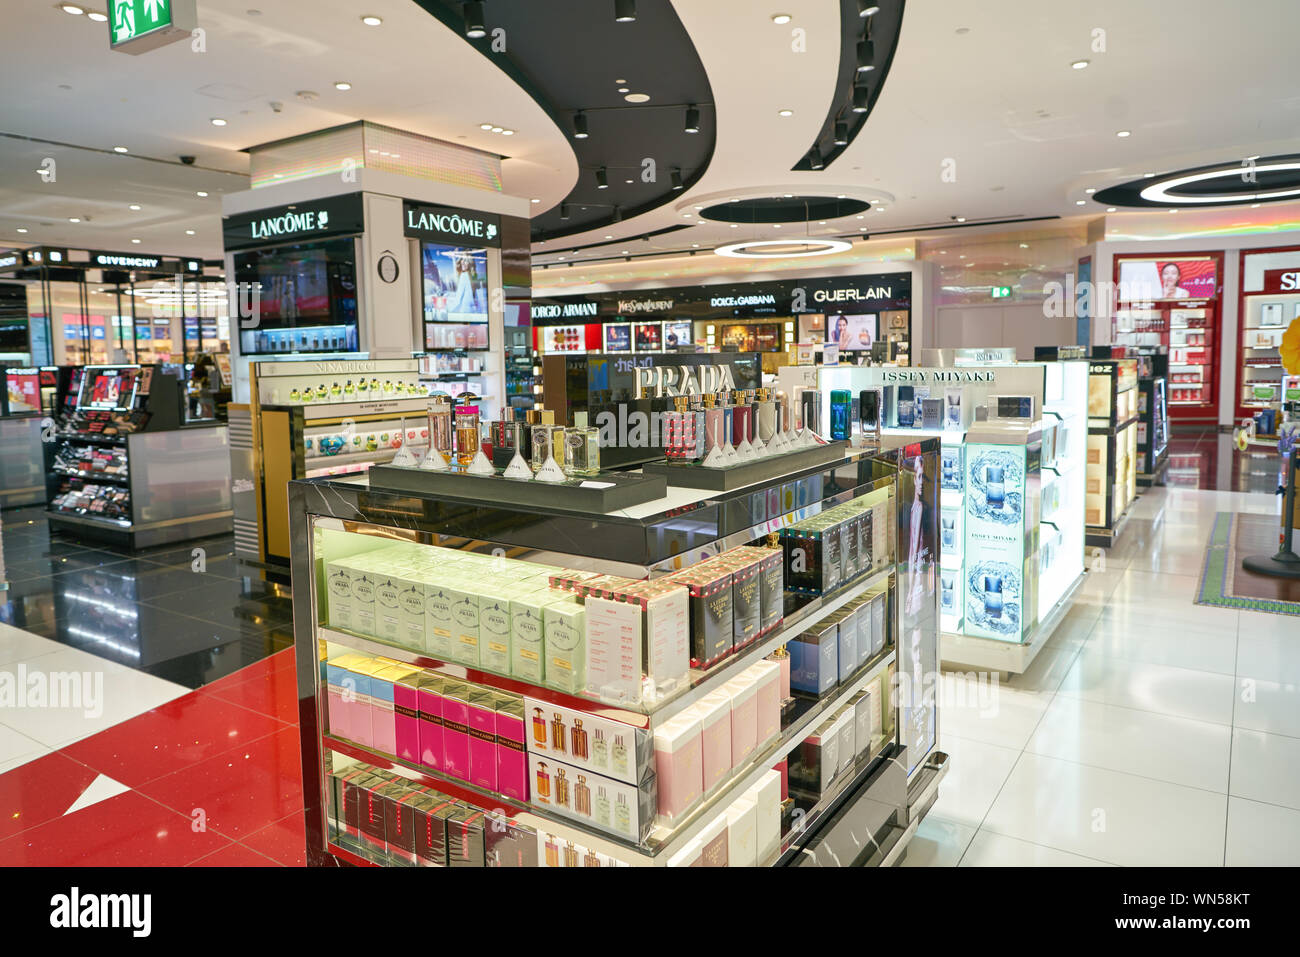 Dubai prada hi-res stock photography and images - Alamy